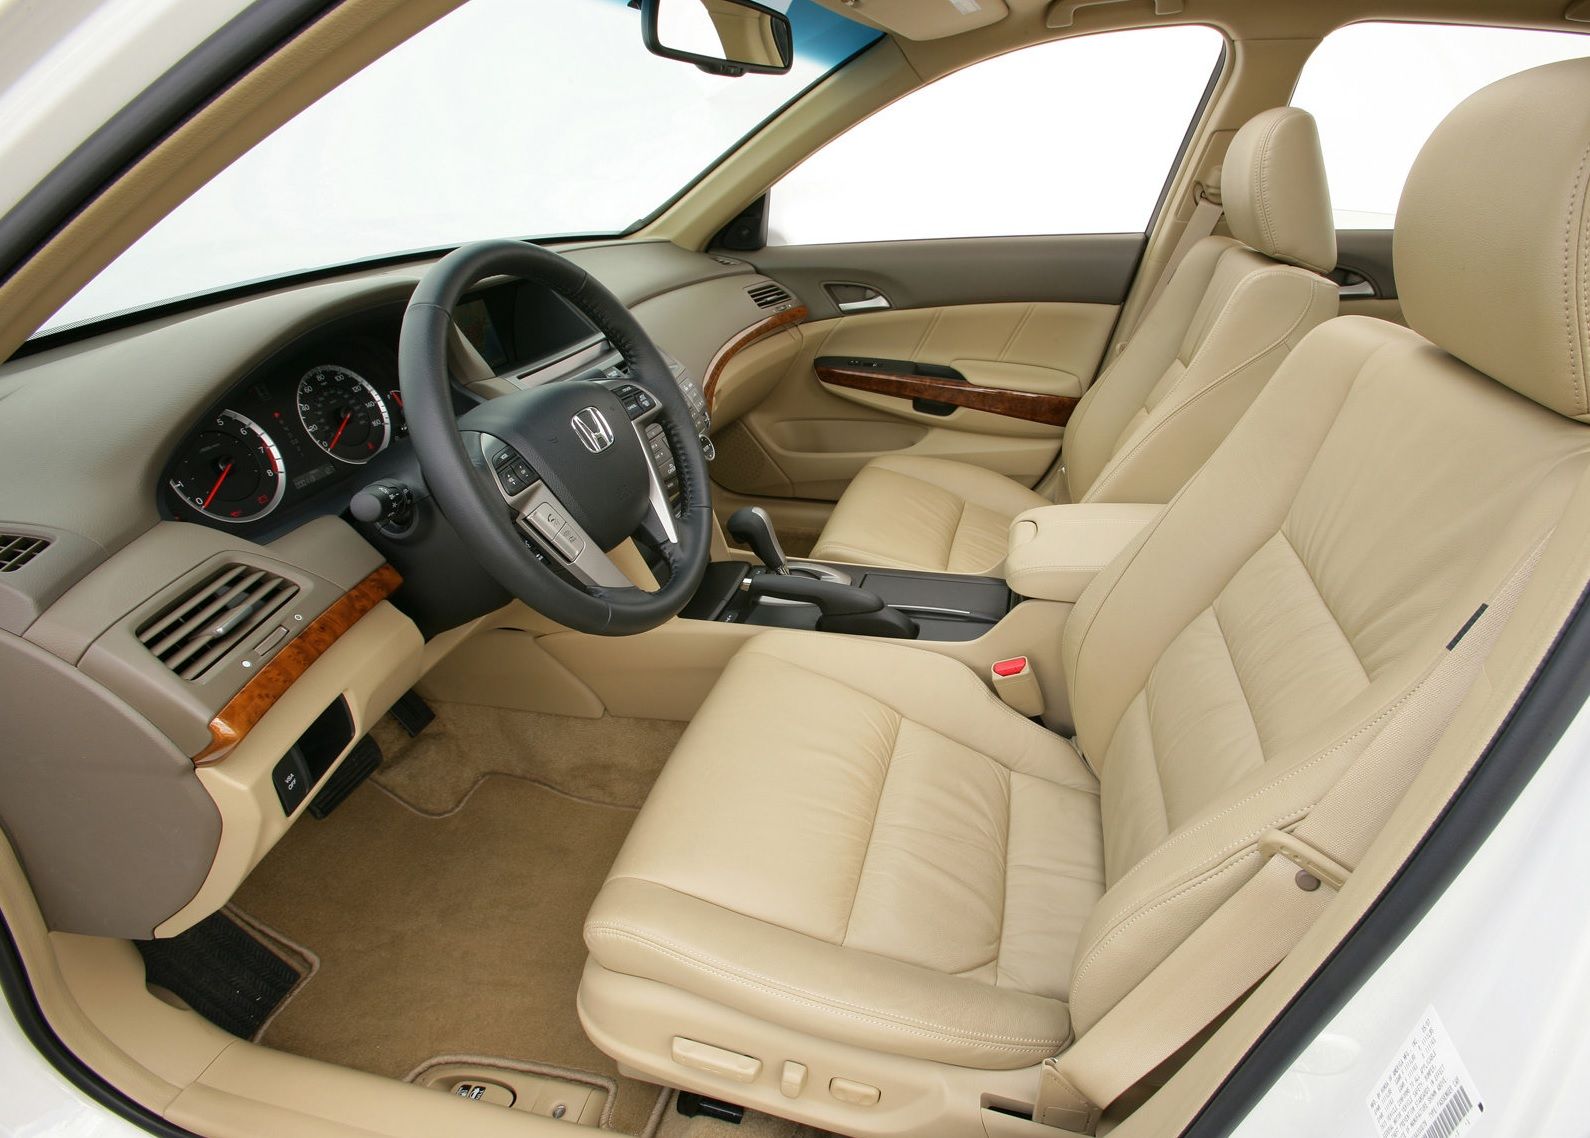 2008 Honda Accord First Row Interior